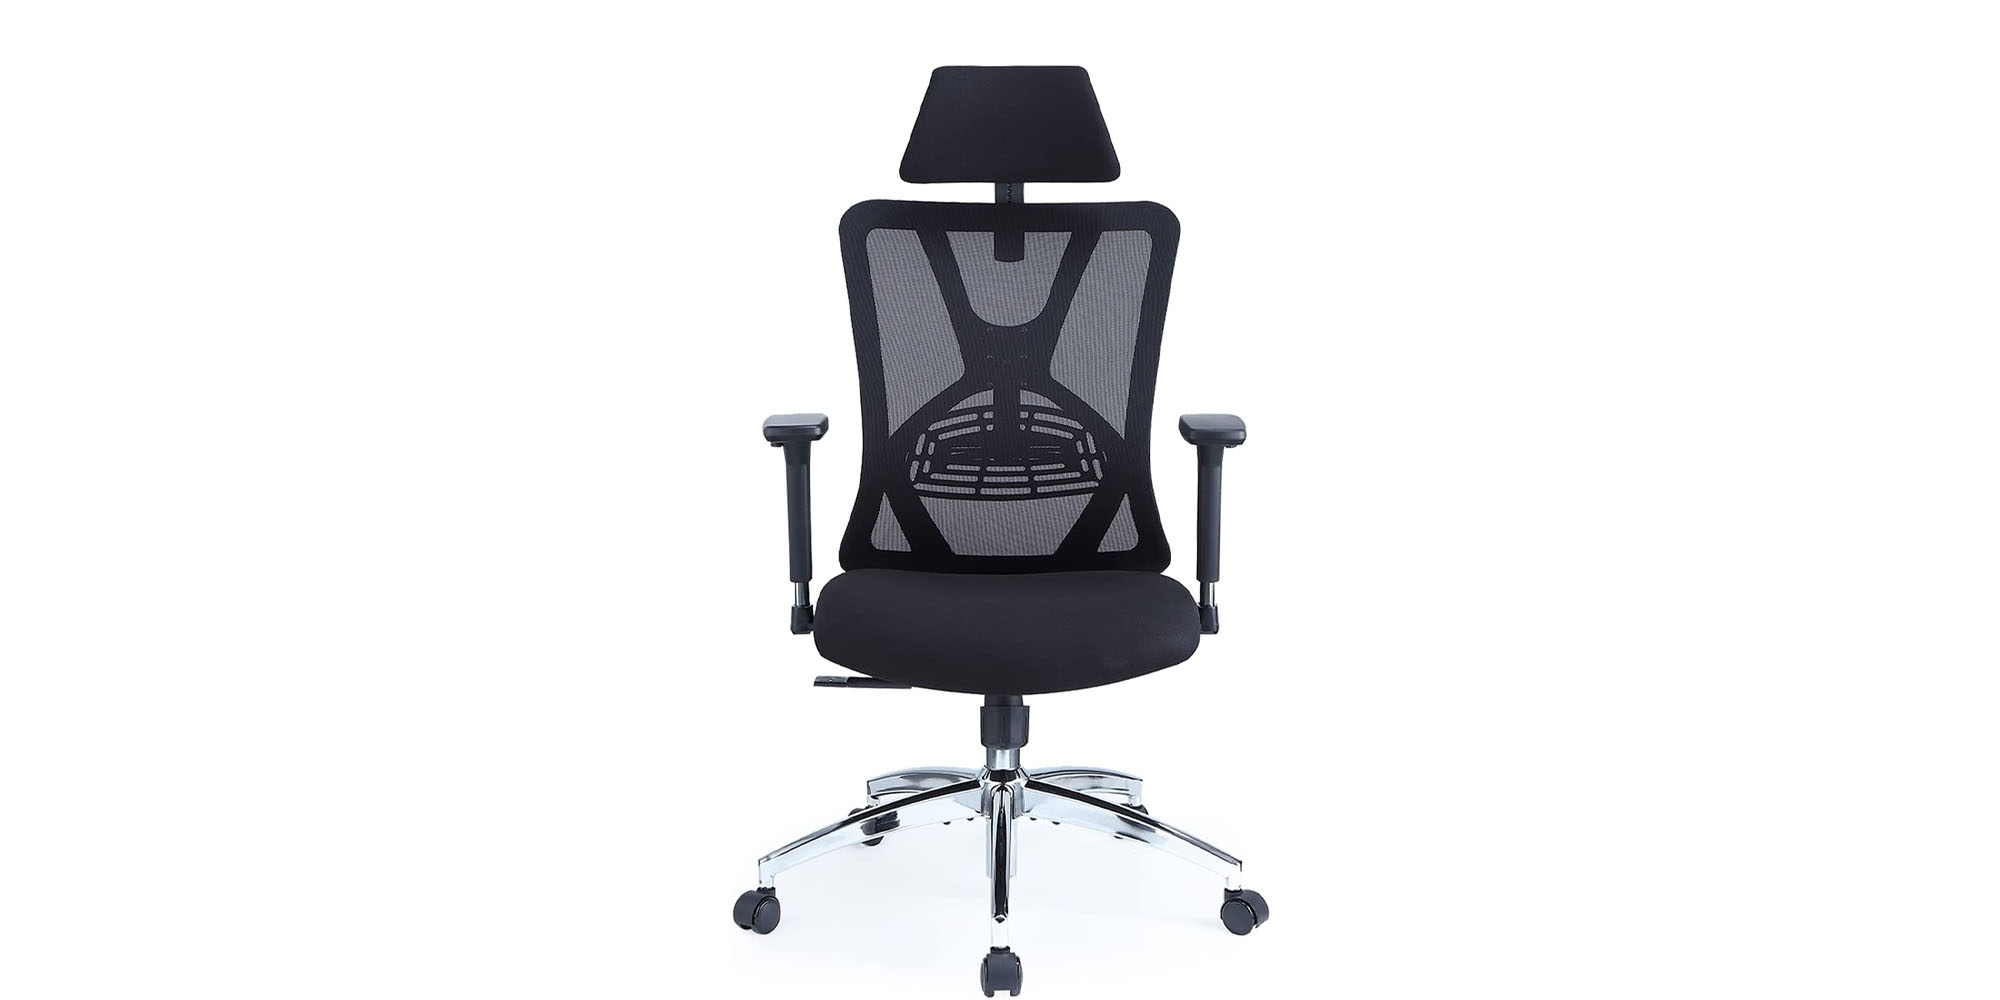 Ticova's Ergonomic High-Back Office Chair with adjustable lumbar